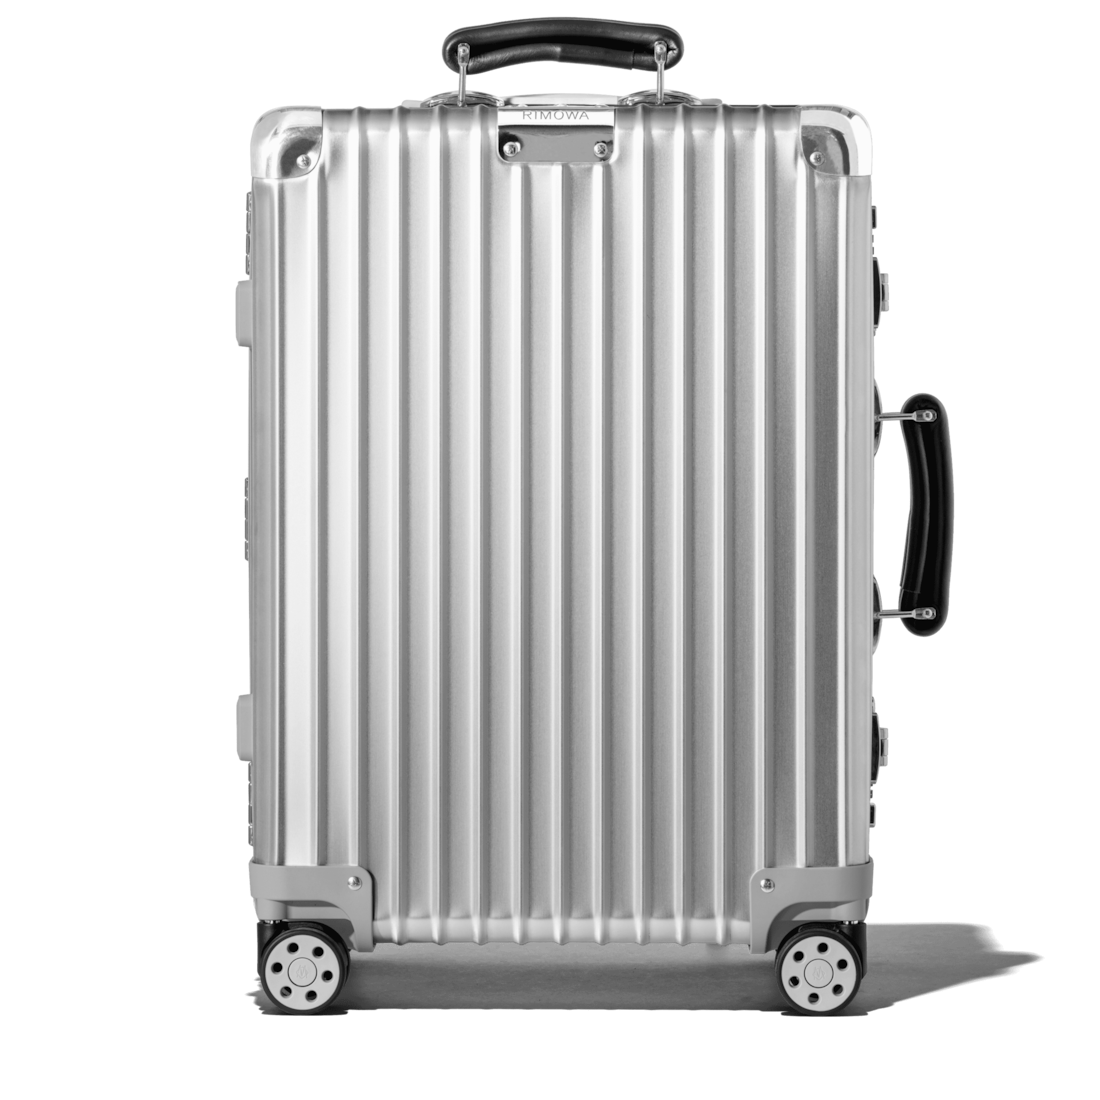 rimowa luggage carry on size